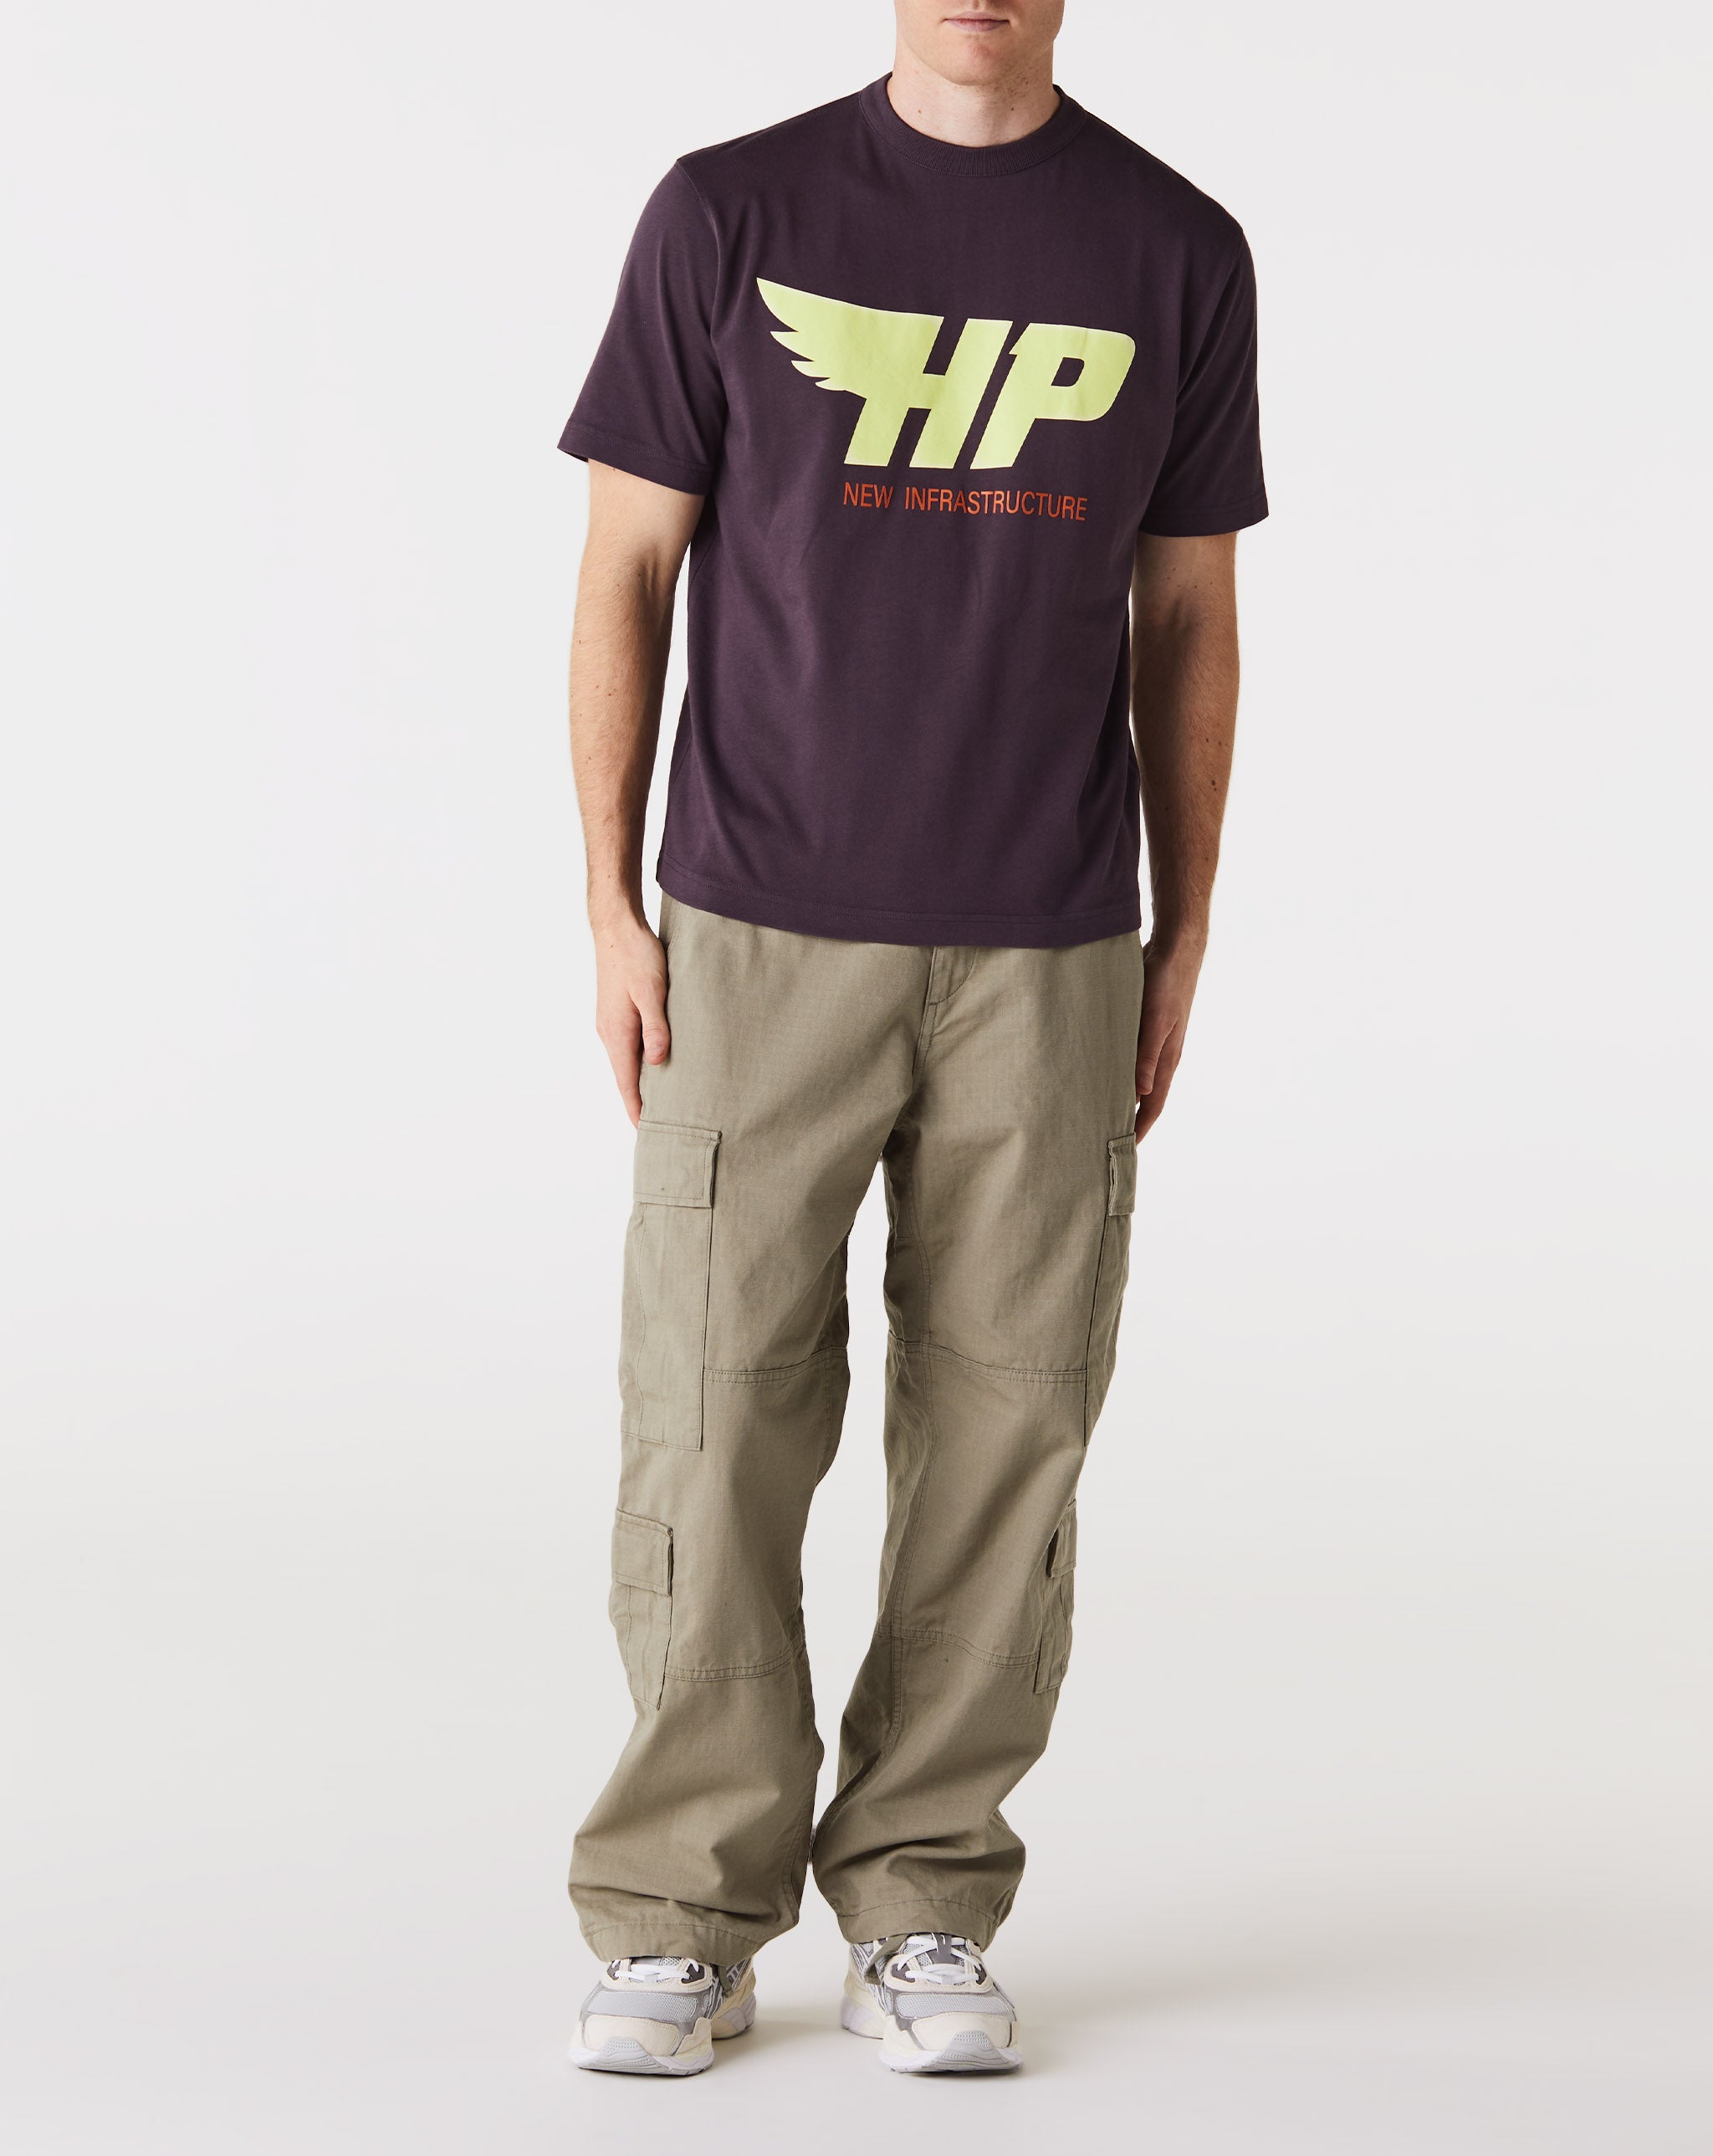 Heron Preston HP Fly T-Shirt  - XHIBITION